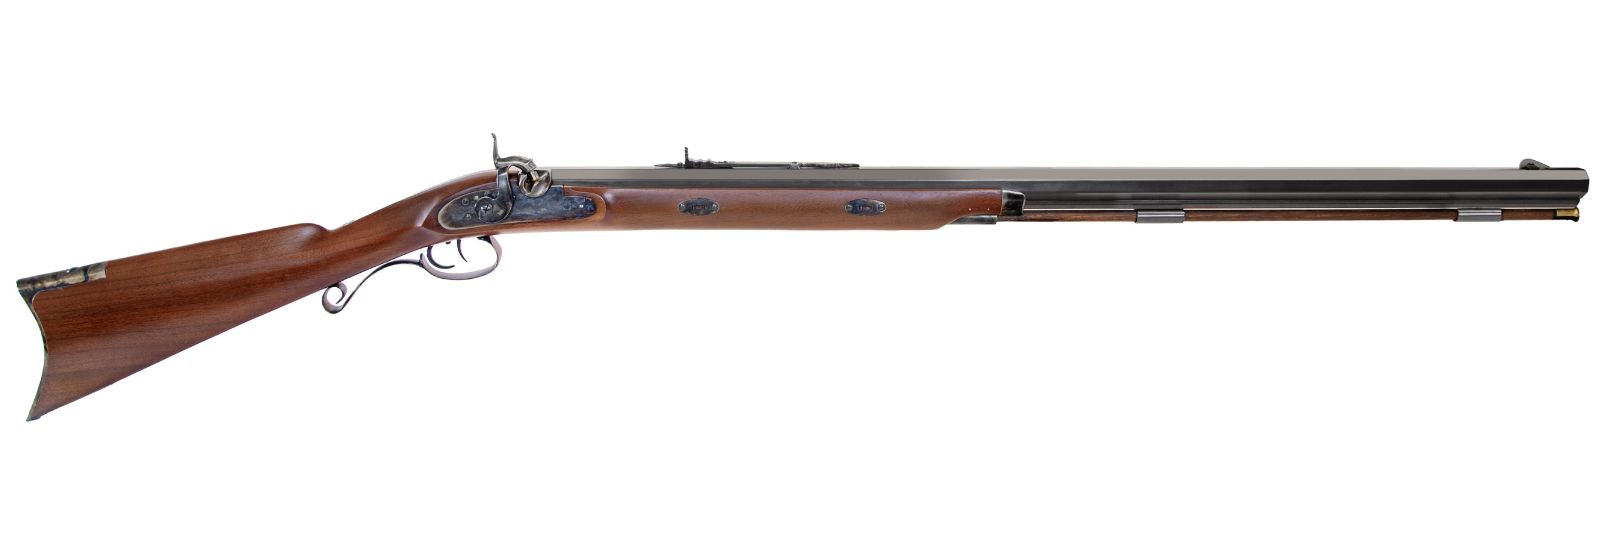 Rocky Mountain Hawken "Walnut" rifle